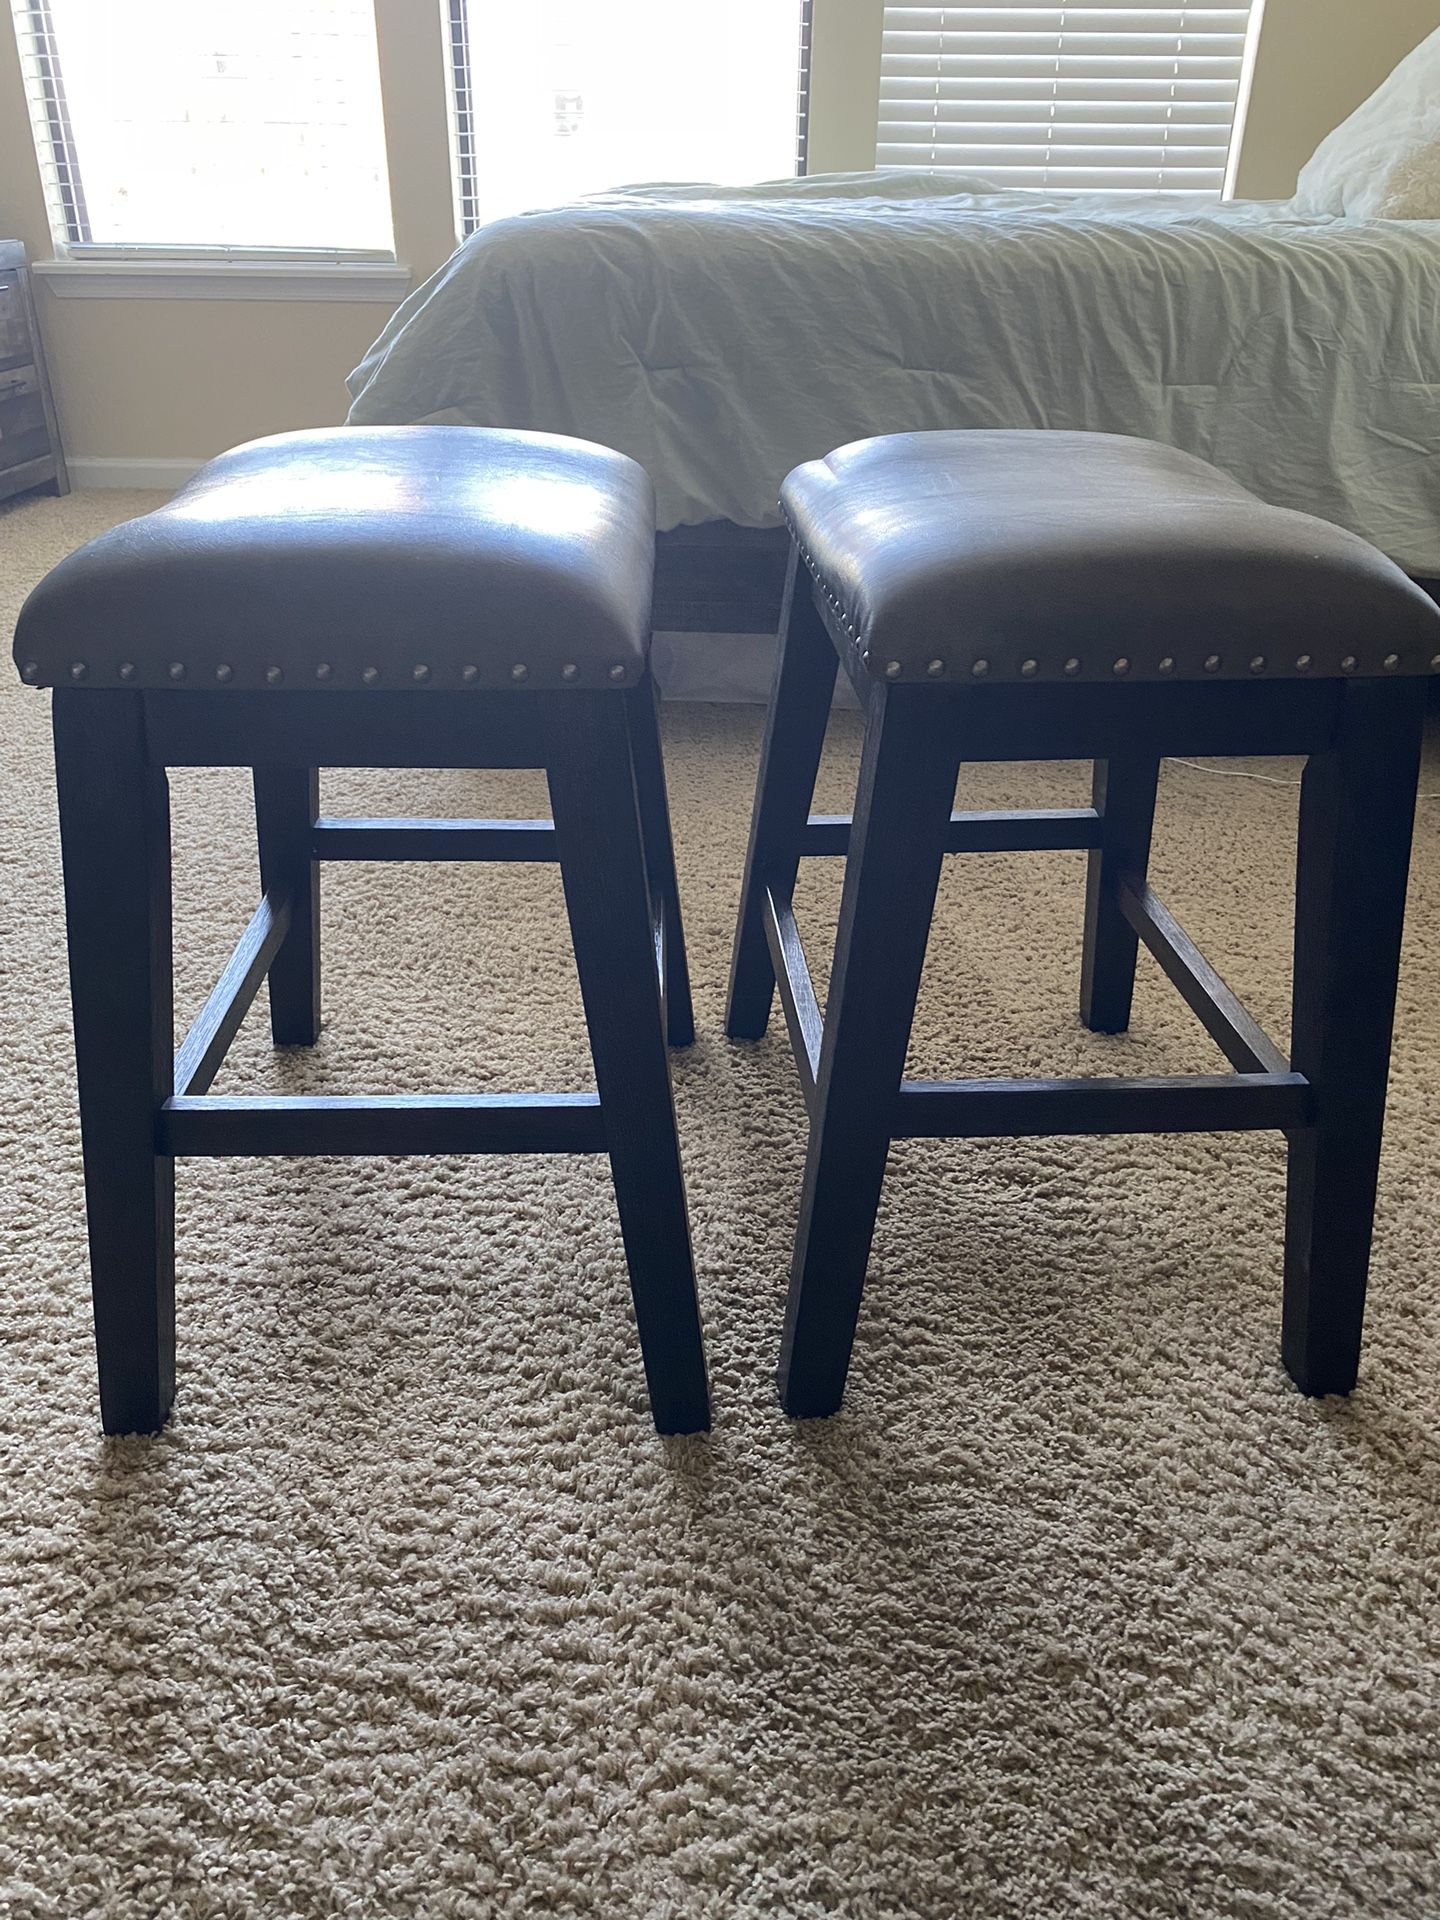 Gray bar stools 